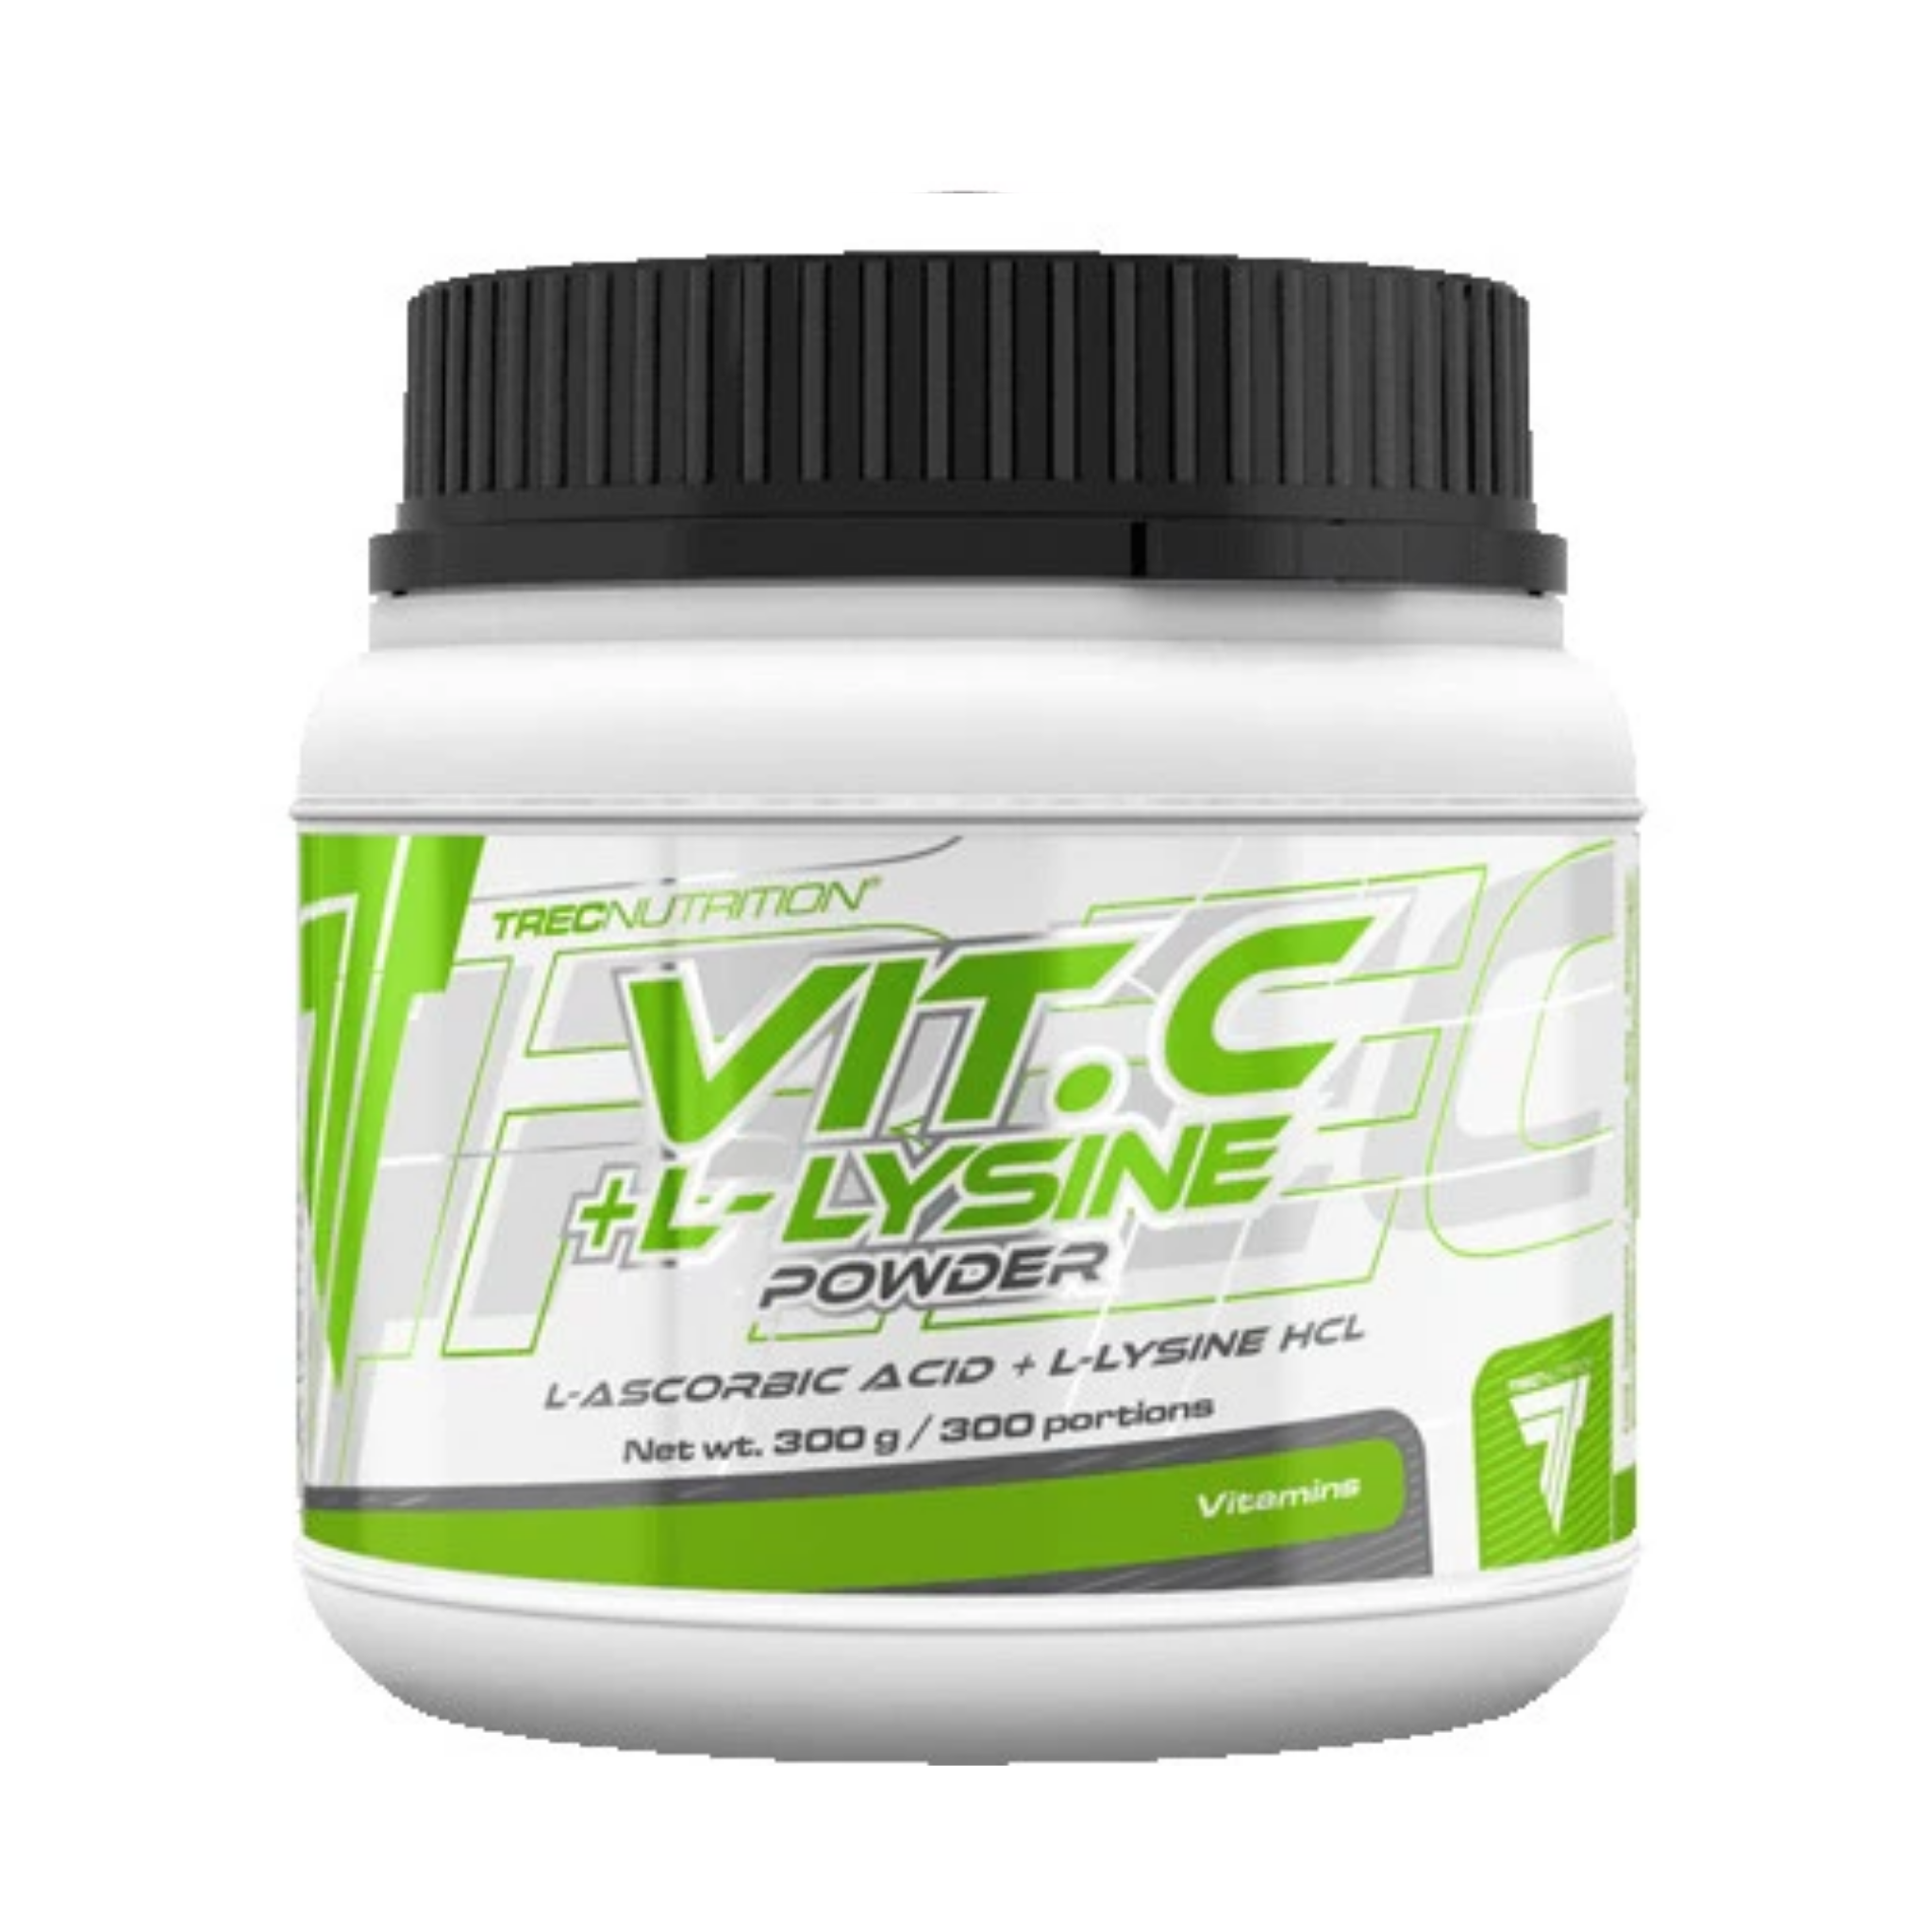 Vit. C + L-Lysine Powder